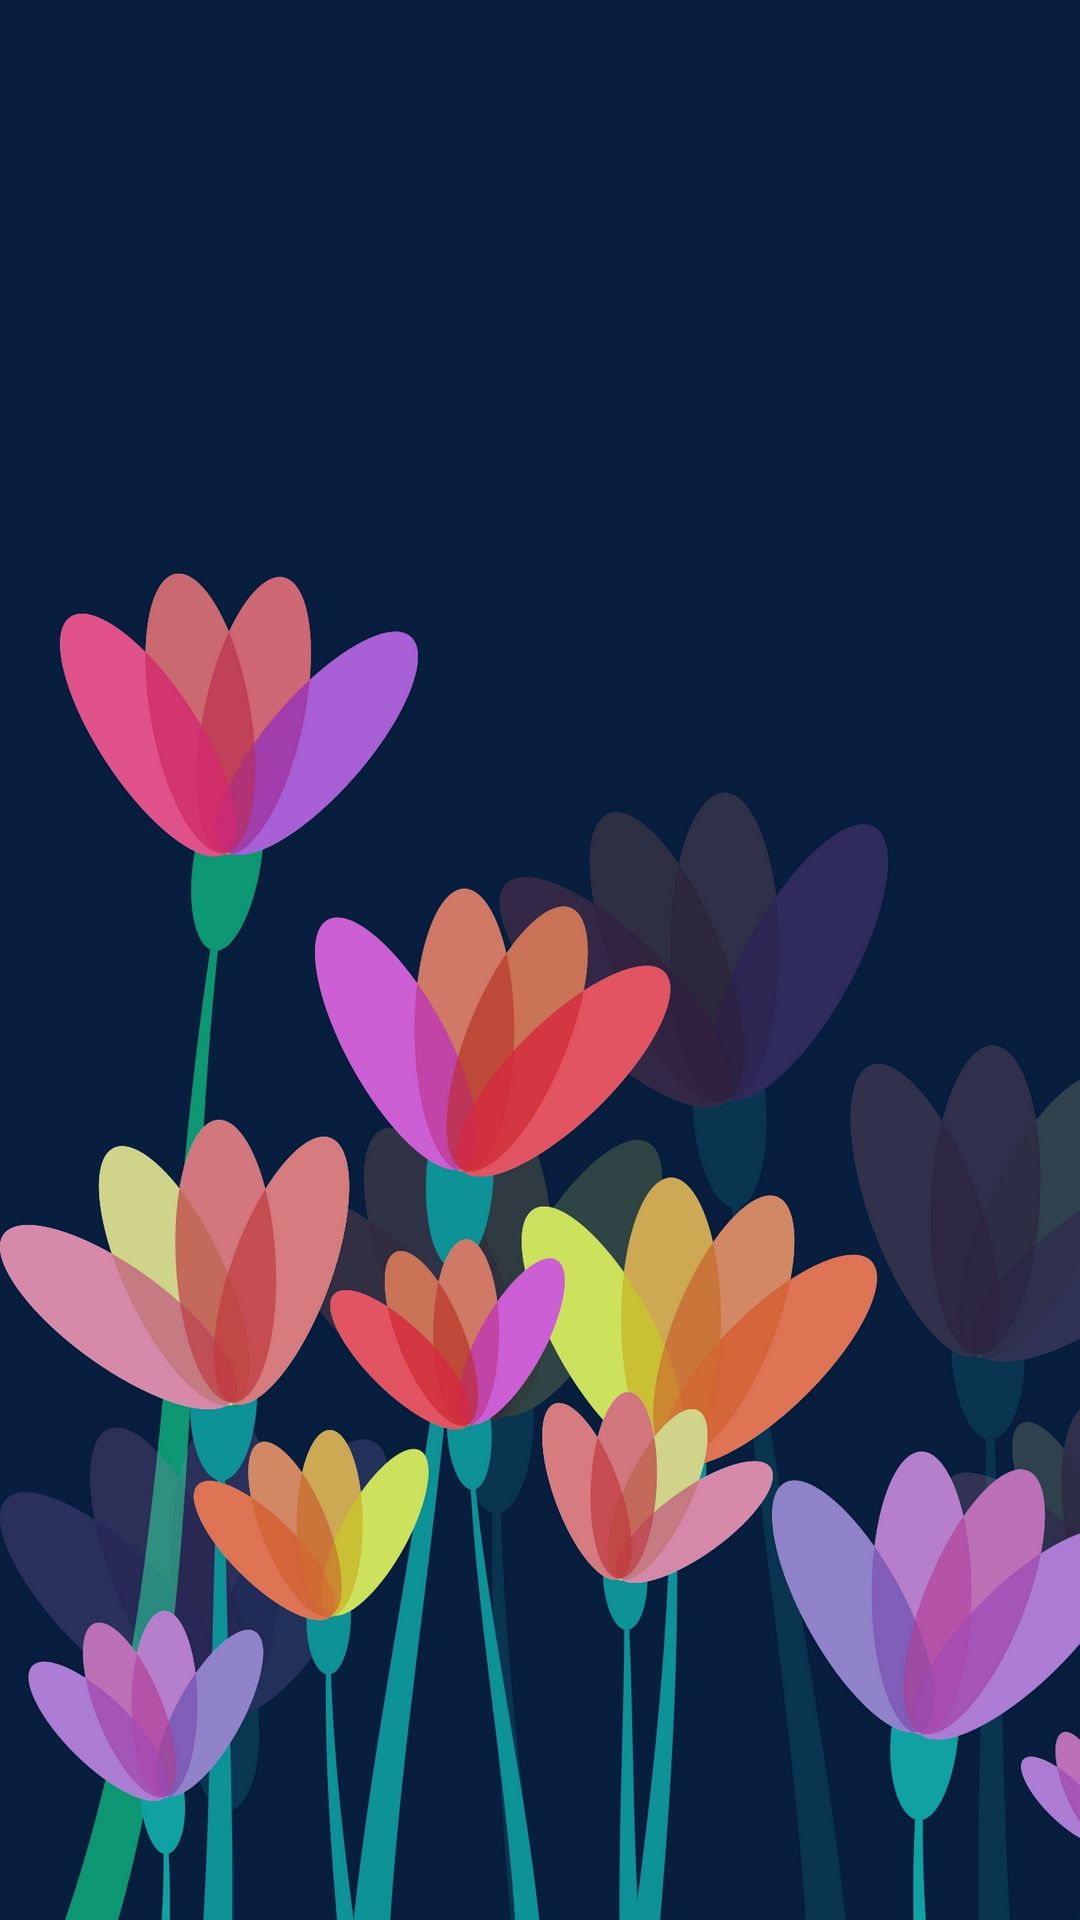 flowers #vector #colorful #vector #wallpaper #lockscreen #mobile